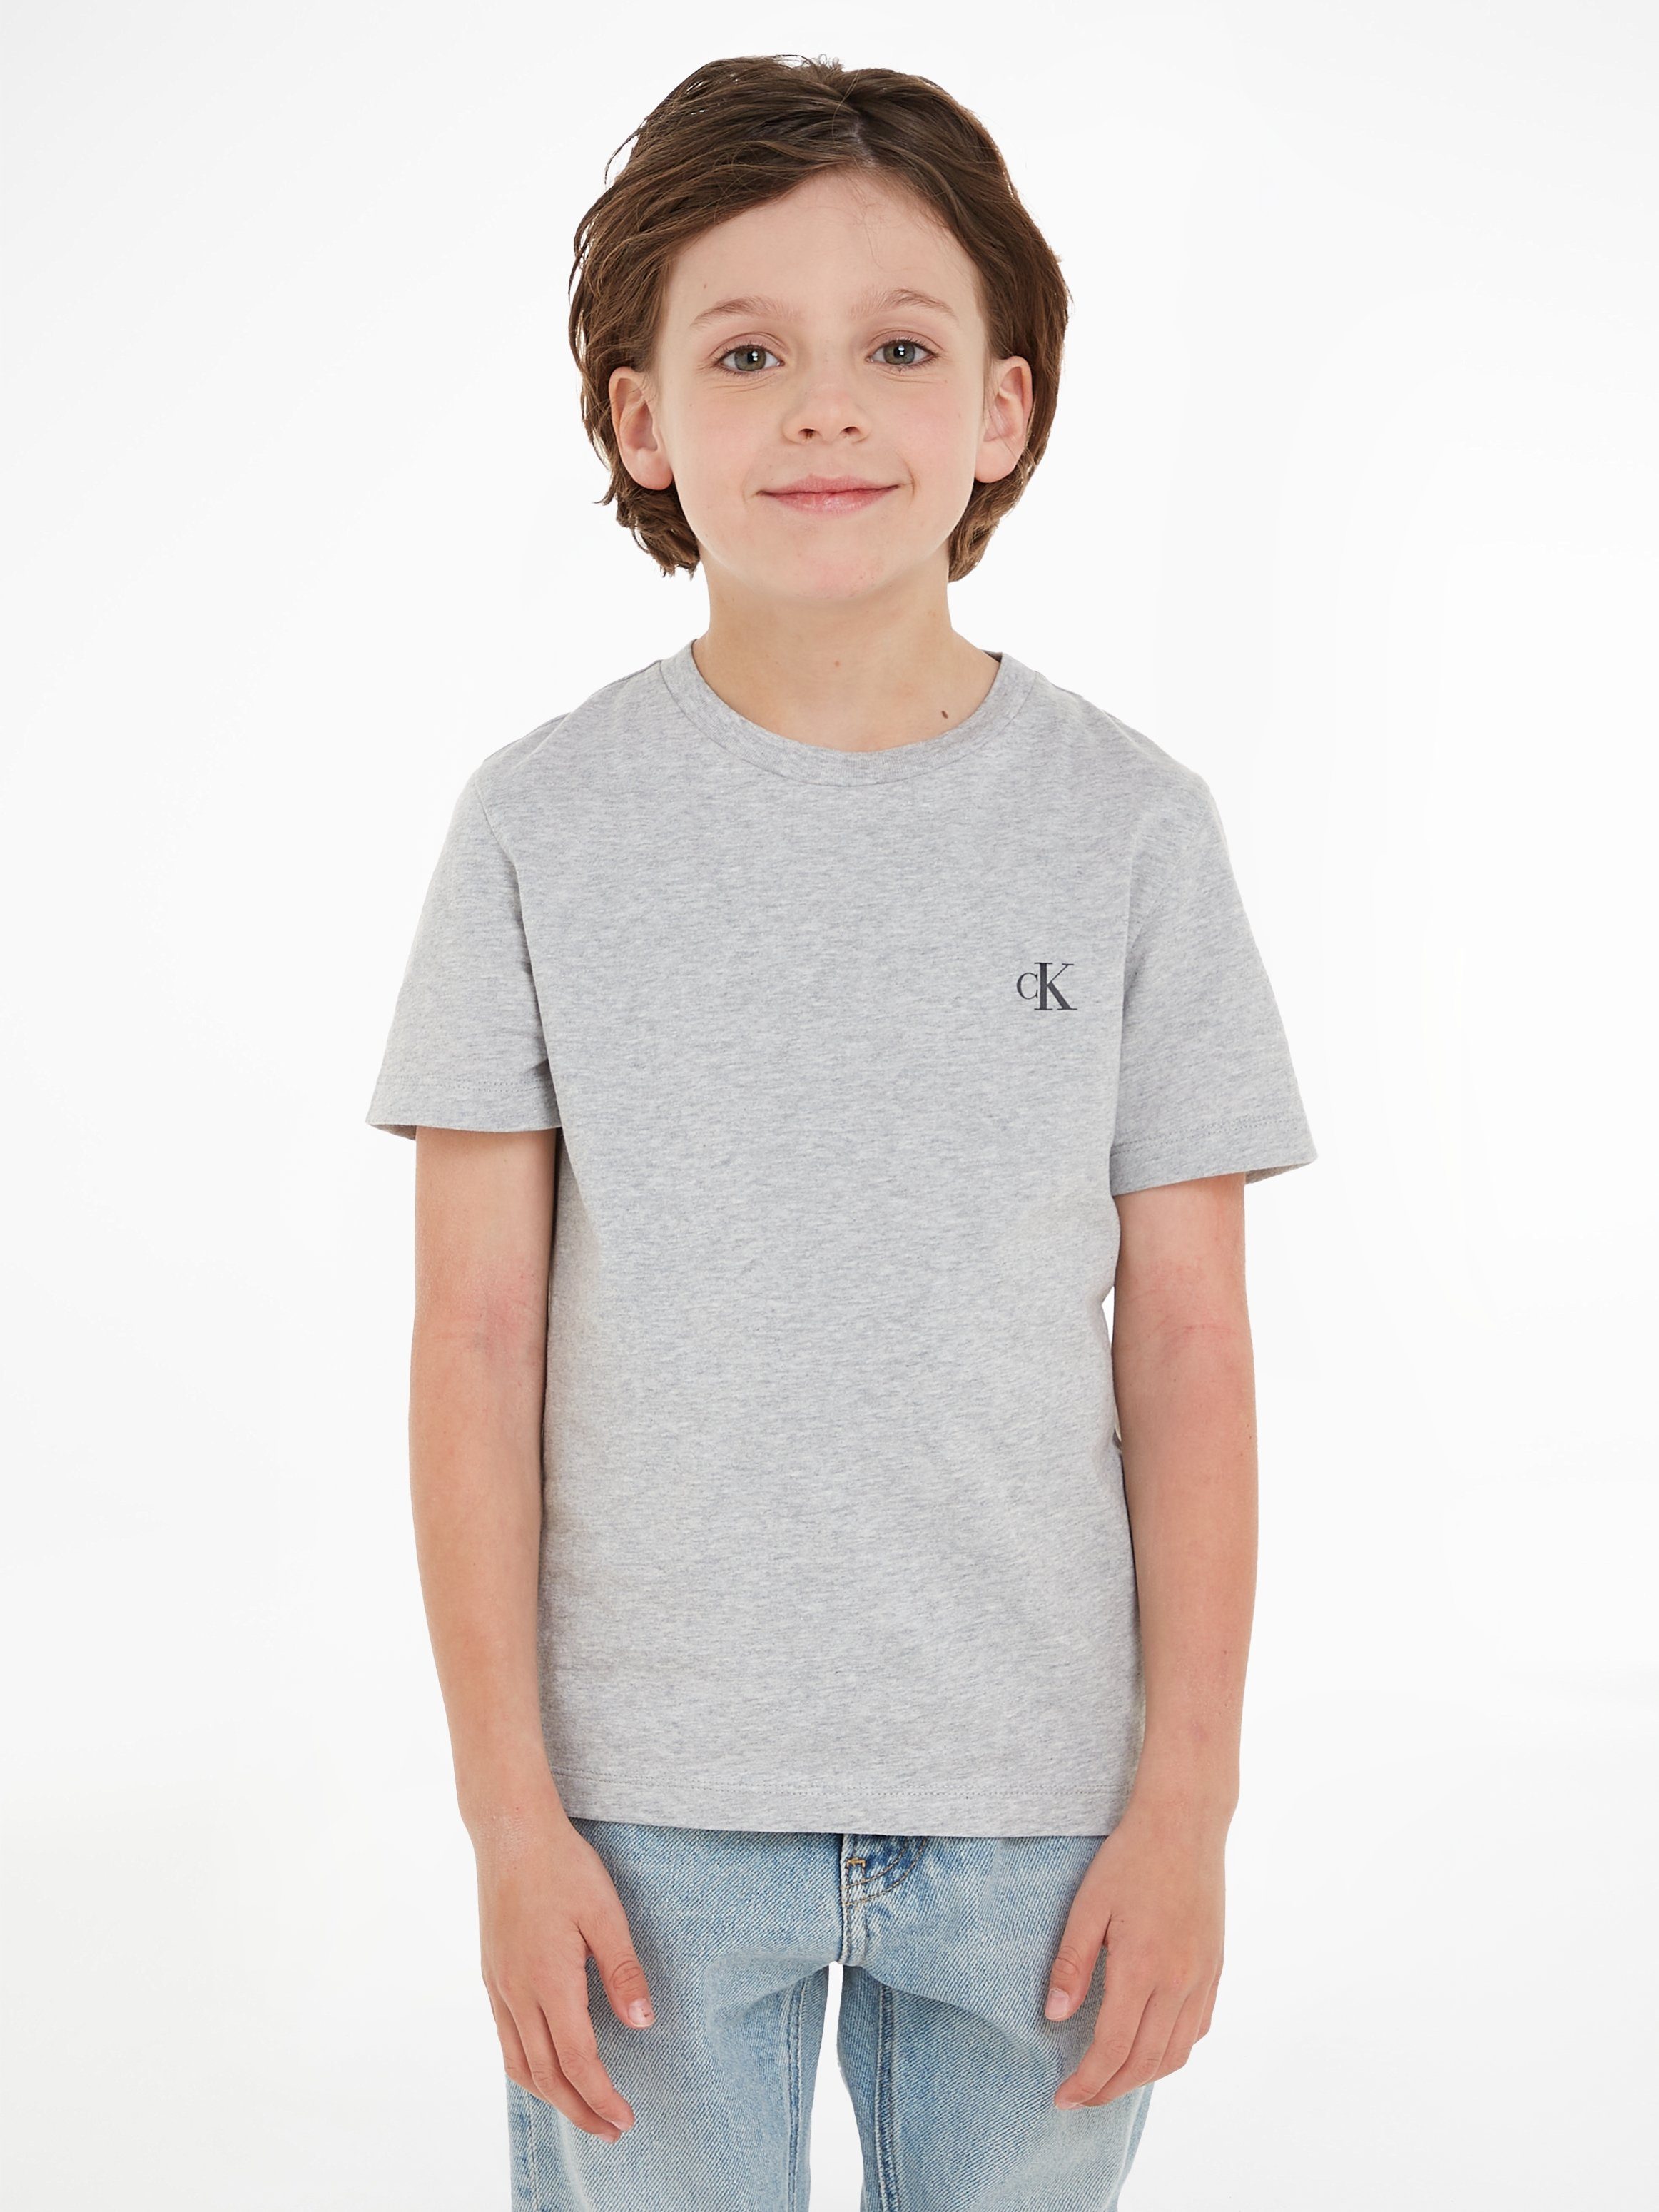 Calvin Klein Jeans T-Shirt 2-PACK mit Logodruck TOP MONOGRAM blau-grau